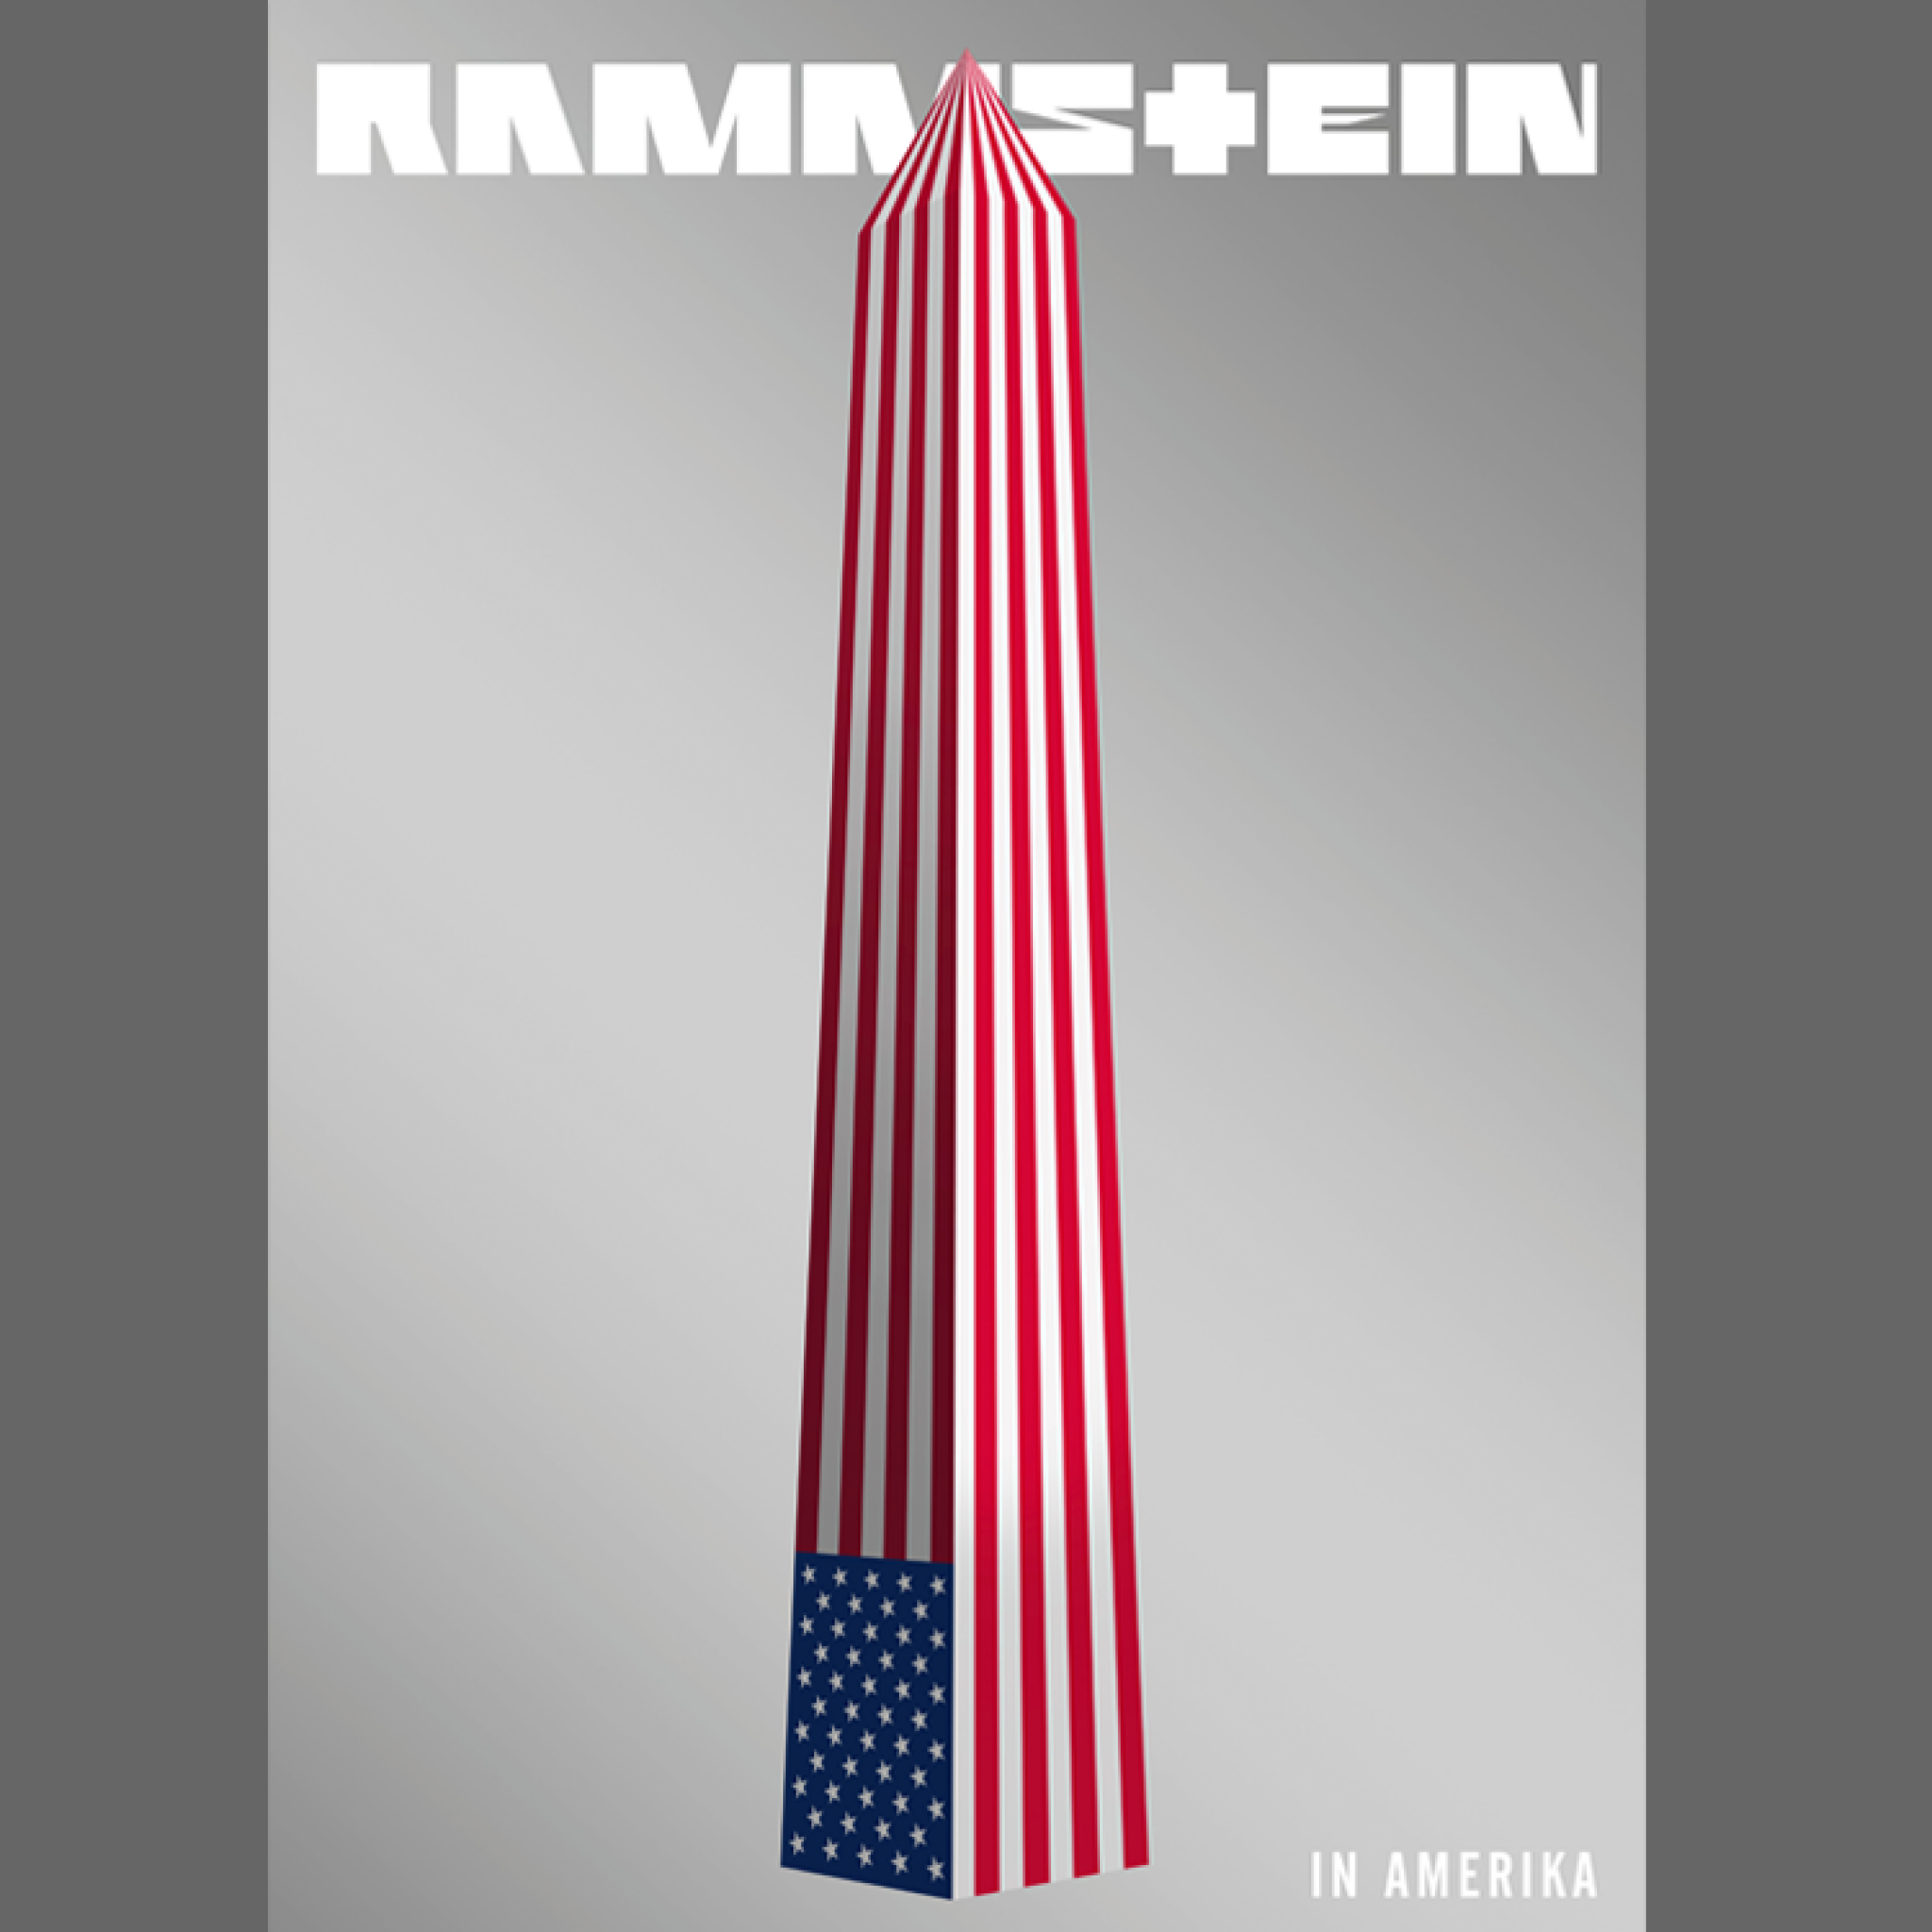 Póster Rammstein in America, formato vertical, enrollado. 